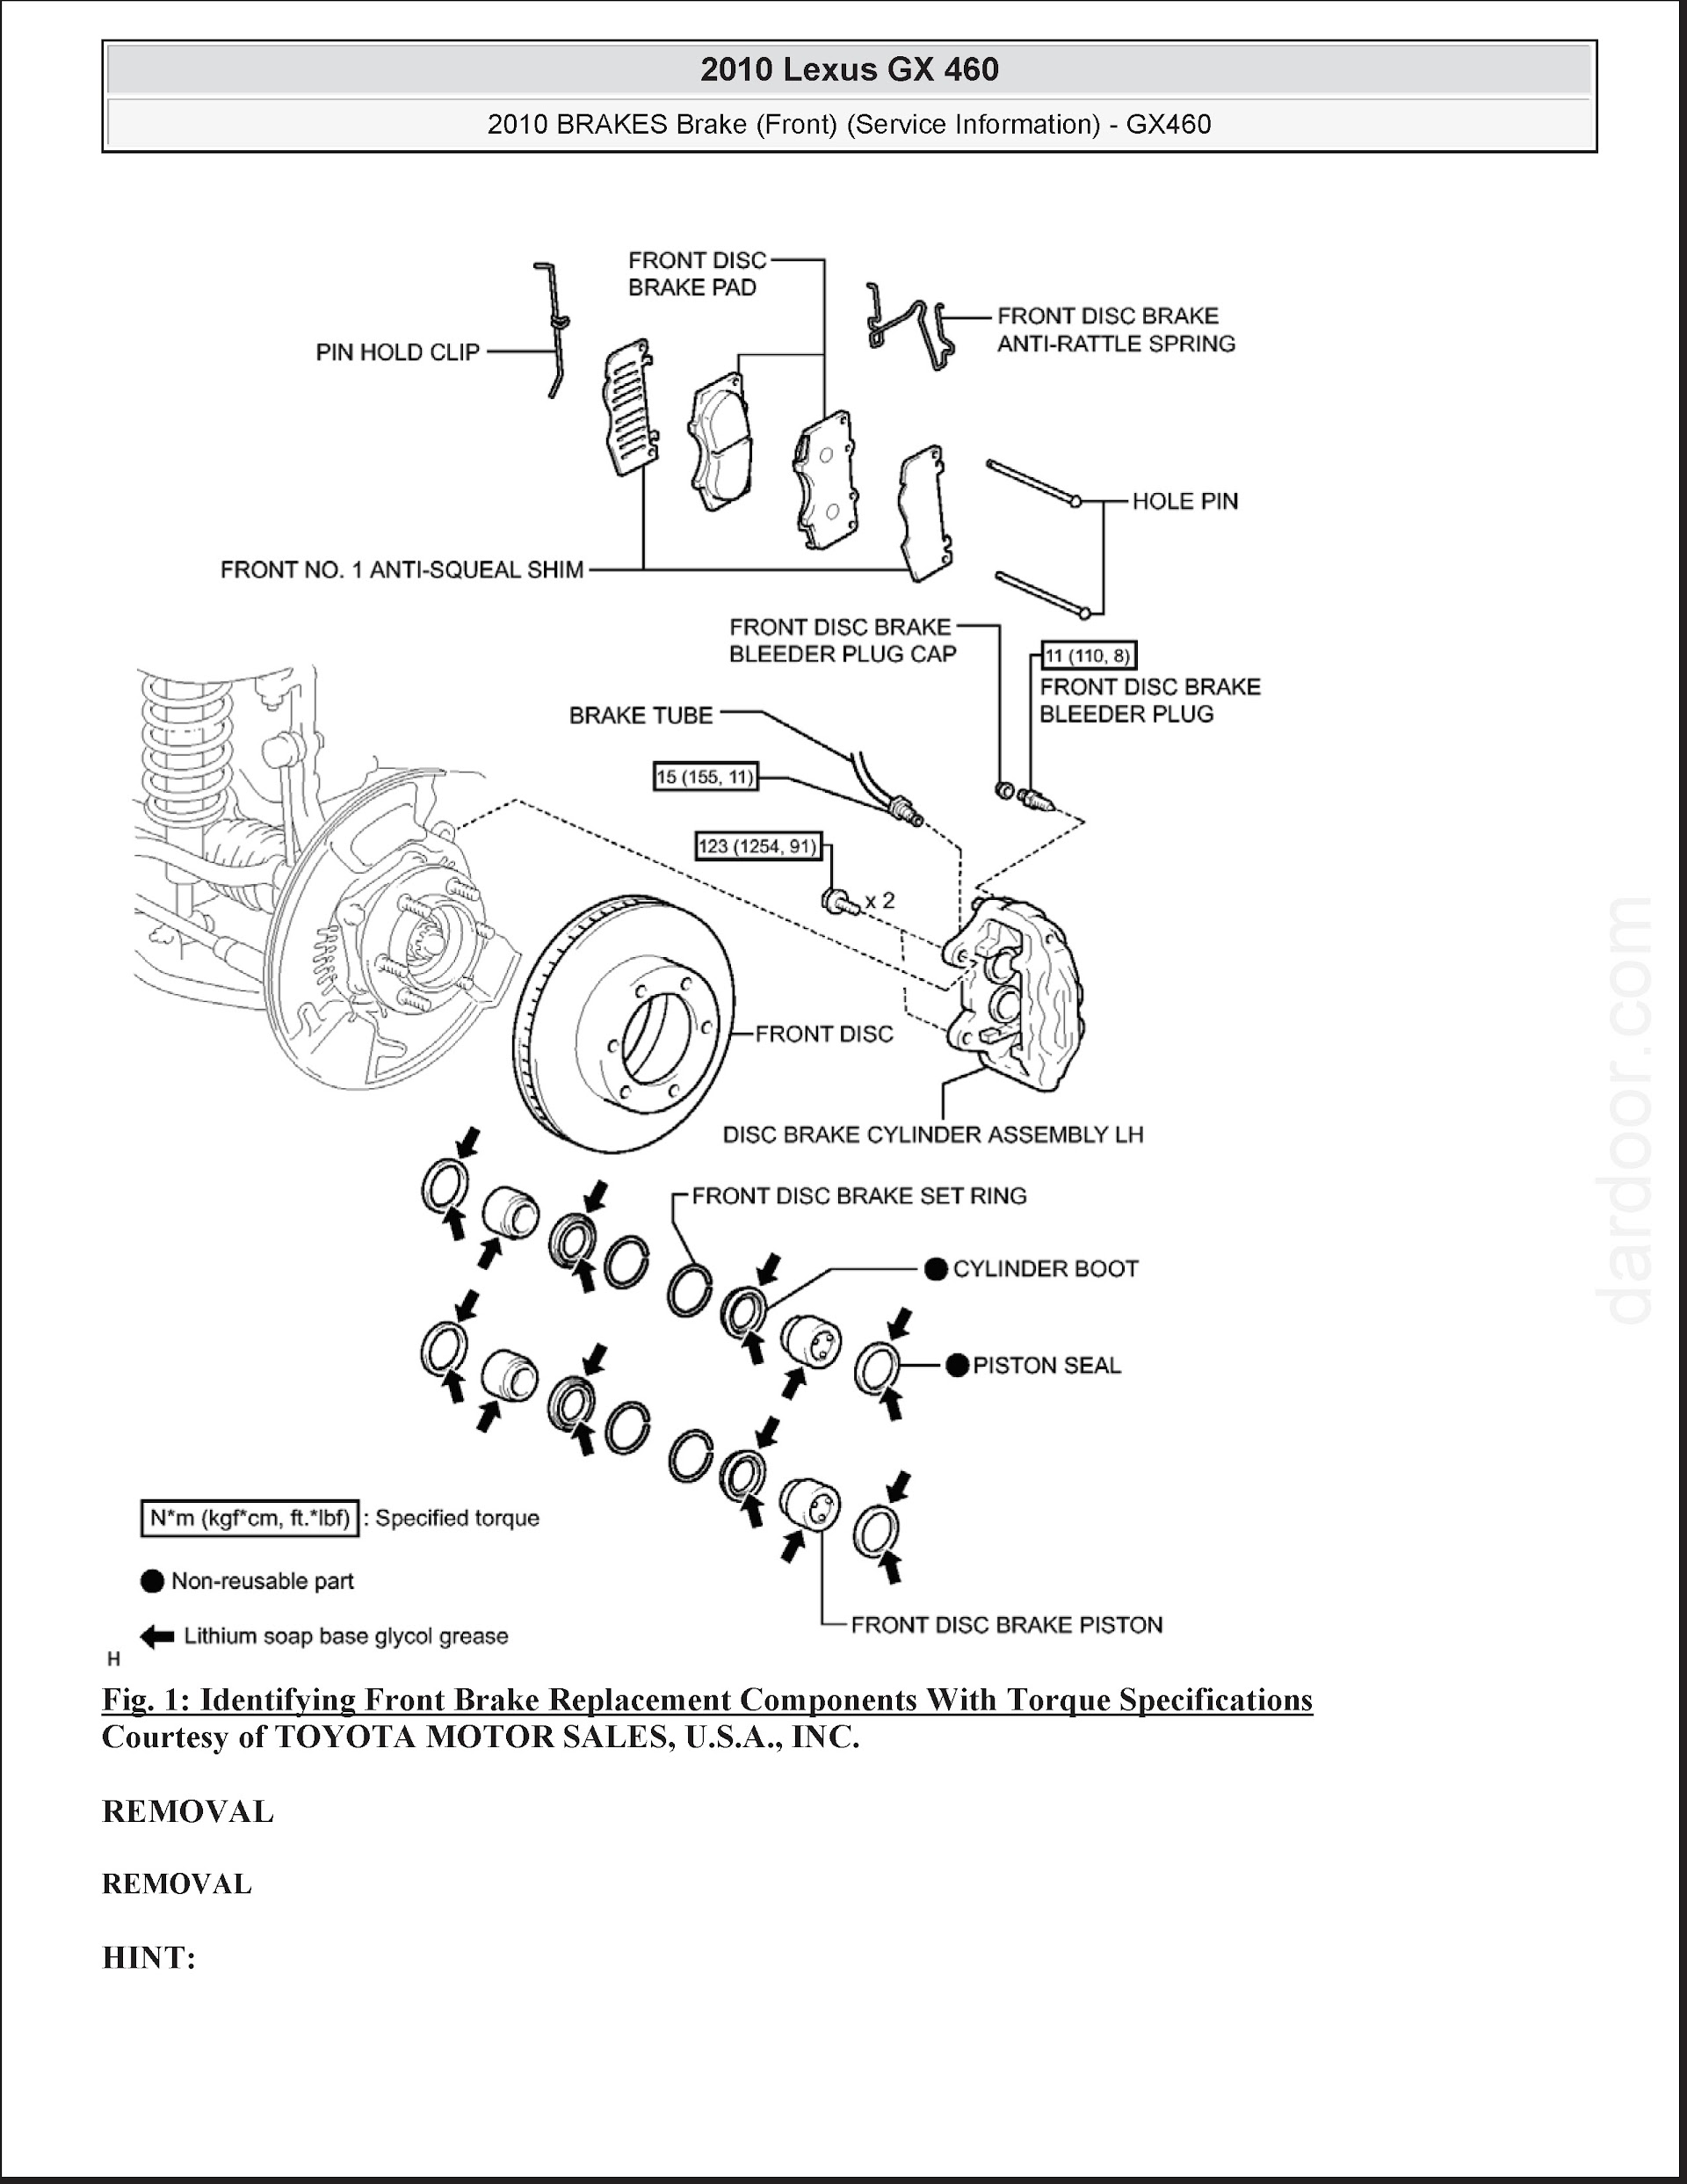 2010-2013 Lexus GX 460 Brake Service Information